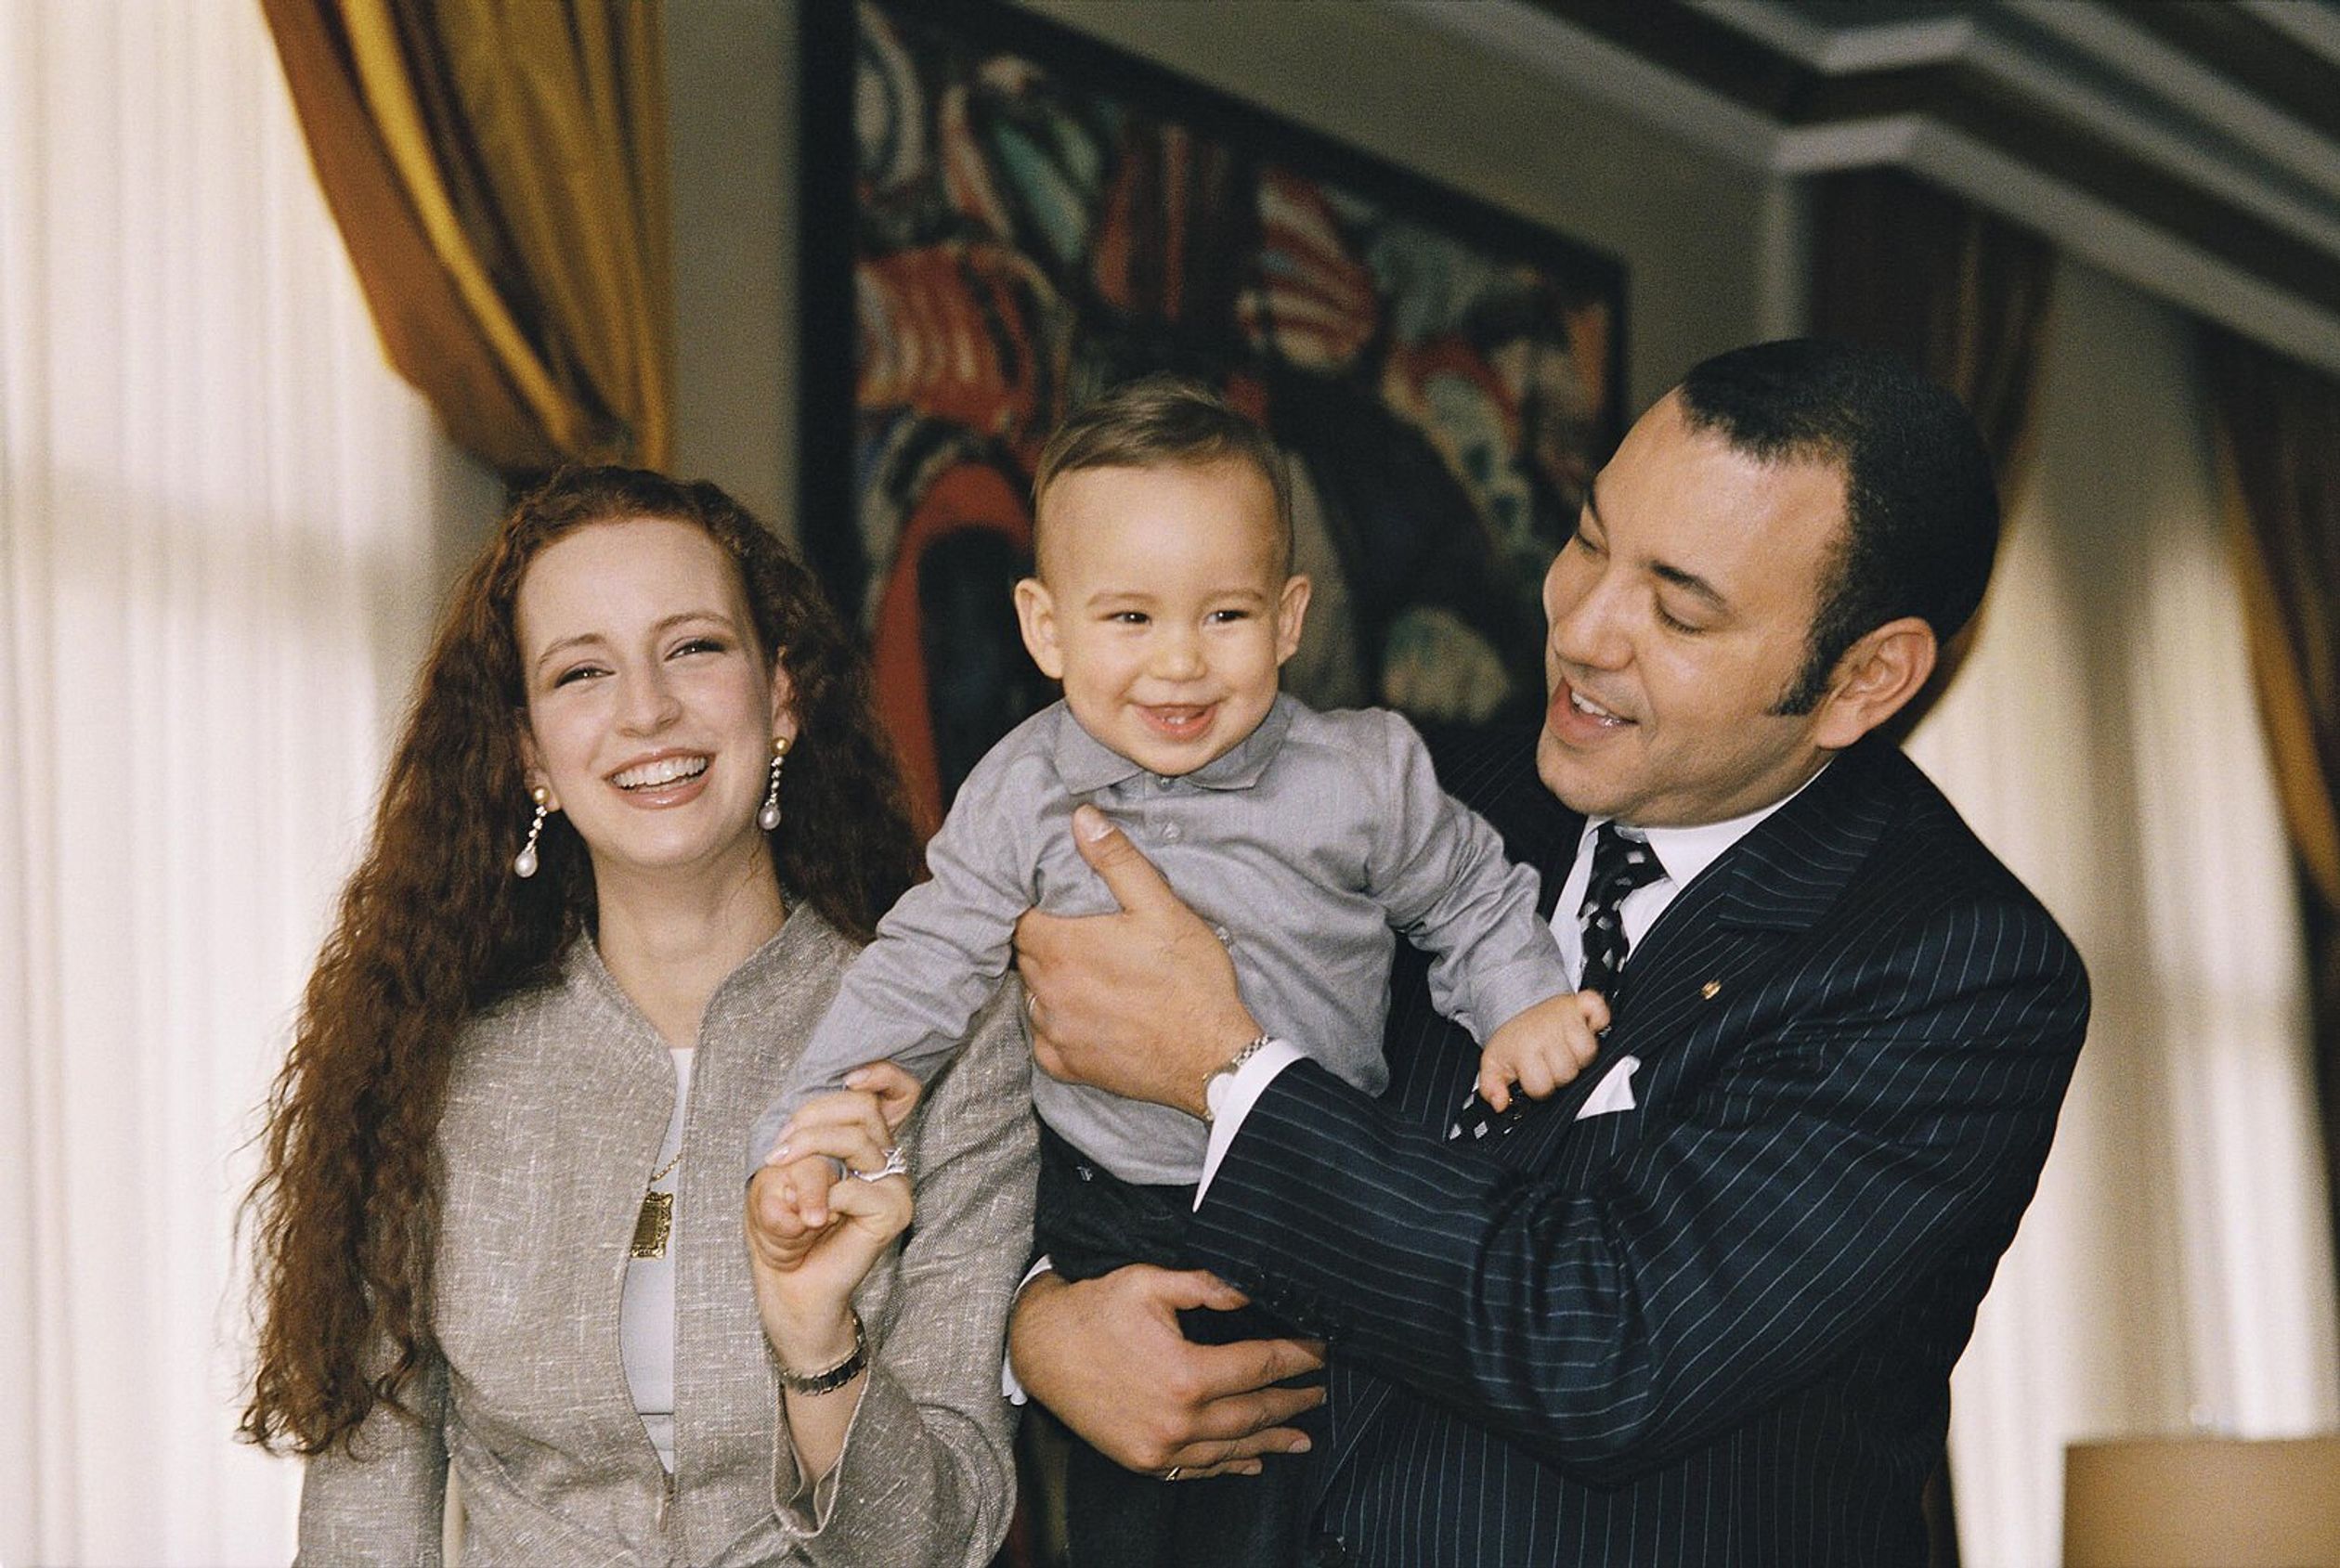 Koning Mohammed VI en prinses Lalla Salma poseren op de eerste verjaardag van hun zoontje Moulay